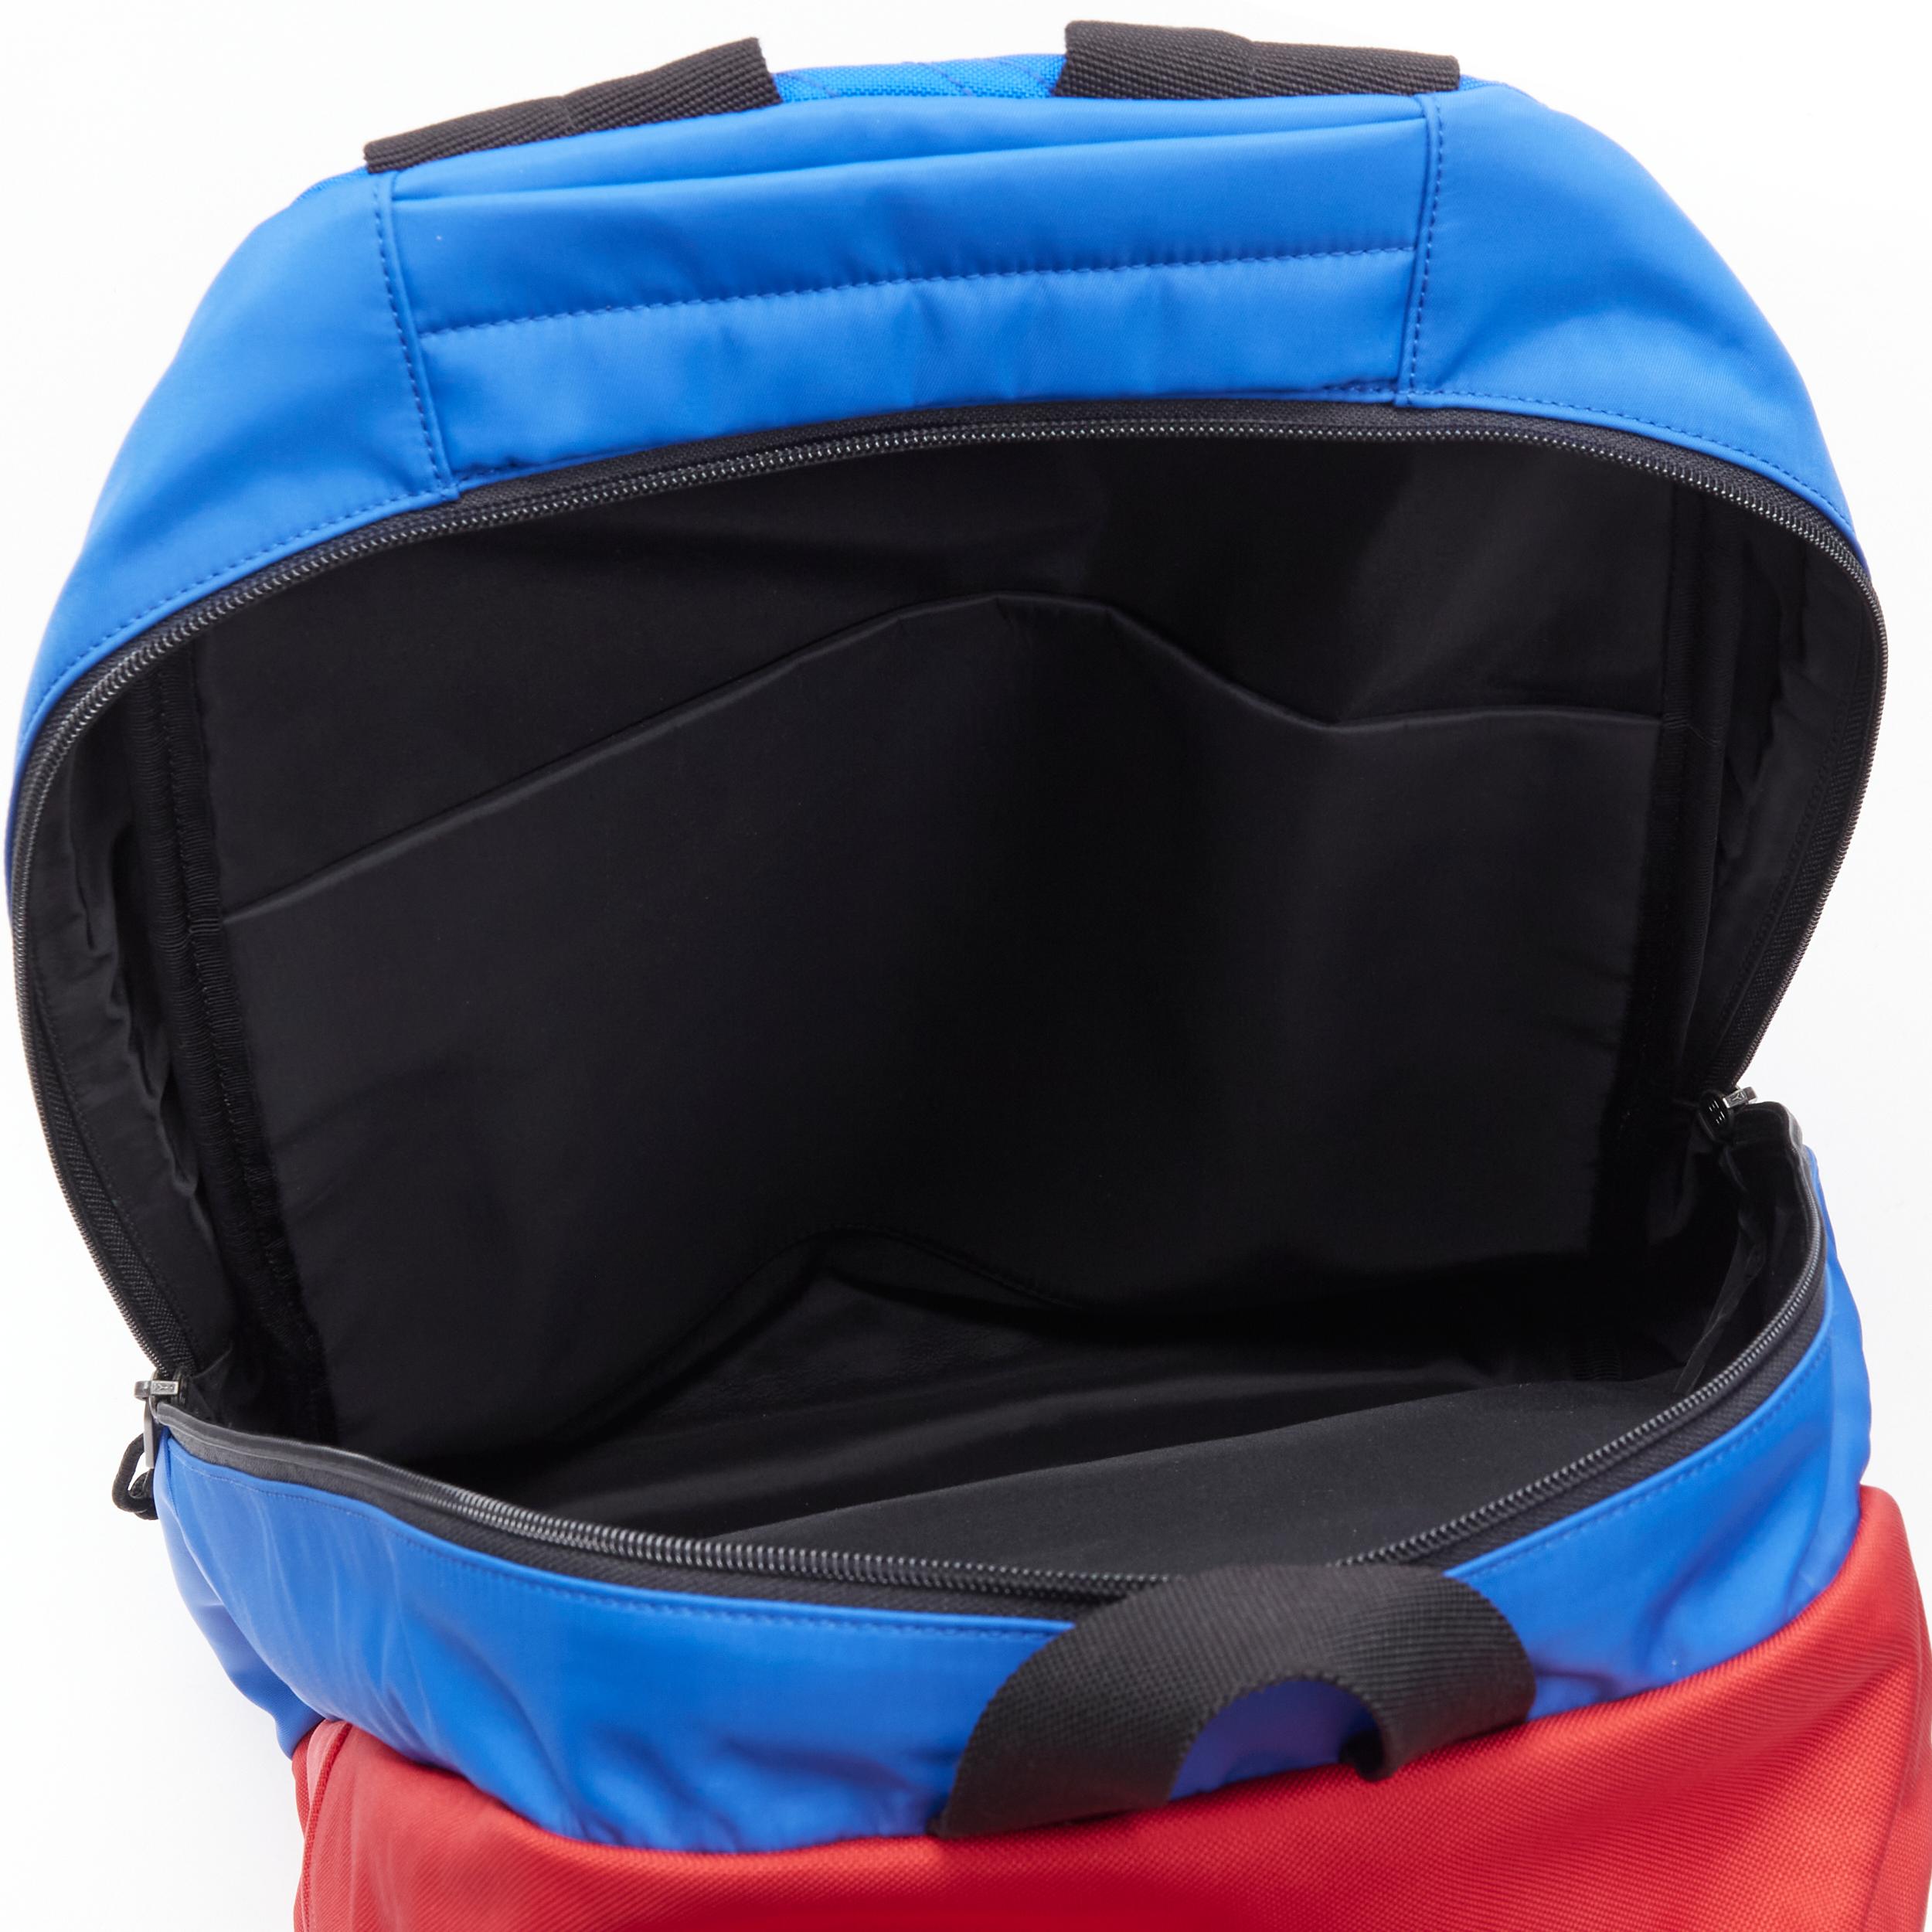 new BALENCIAGA Double Backpack red blue nylon layered monogram jacquard bag 2